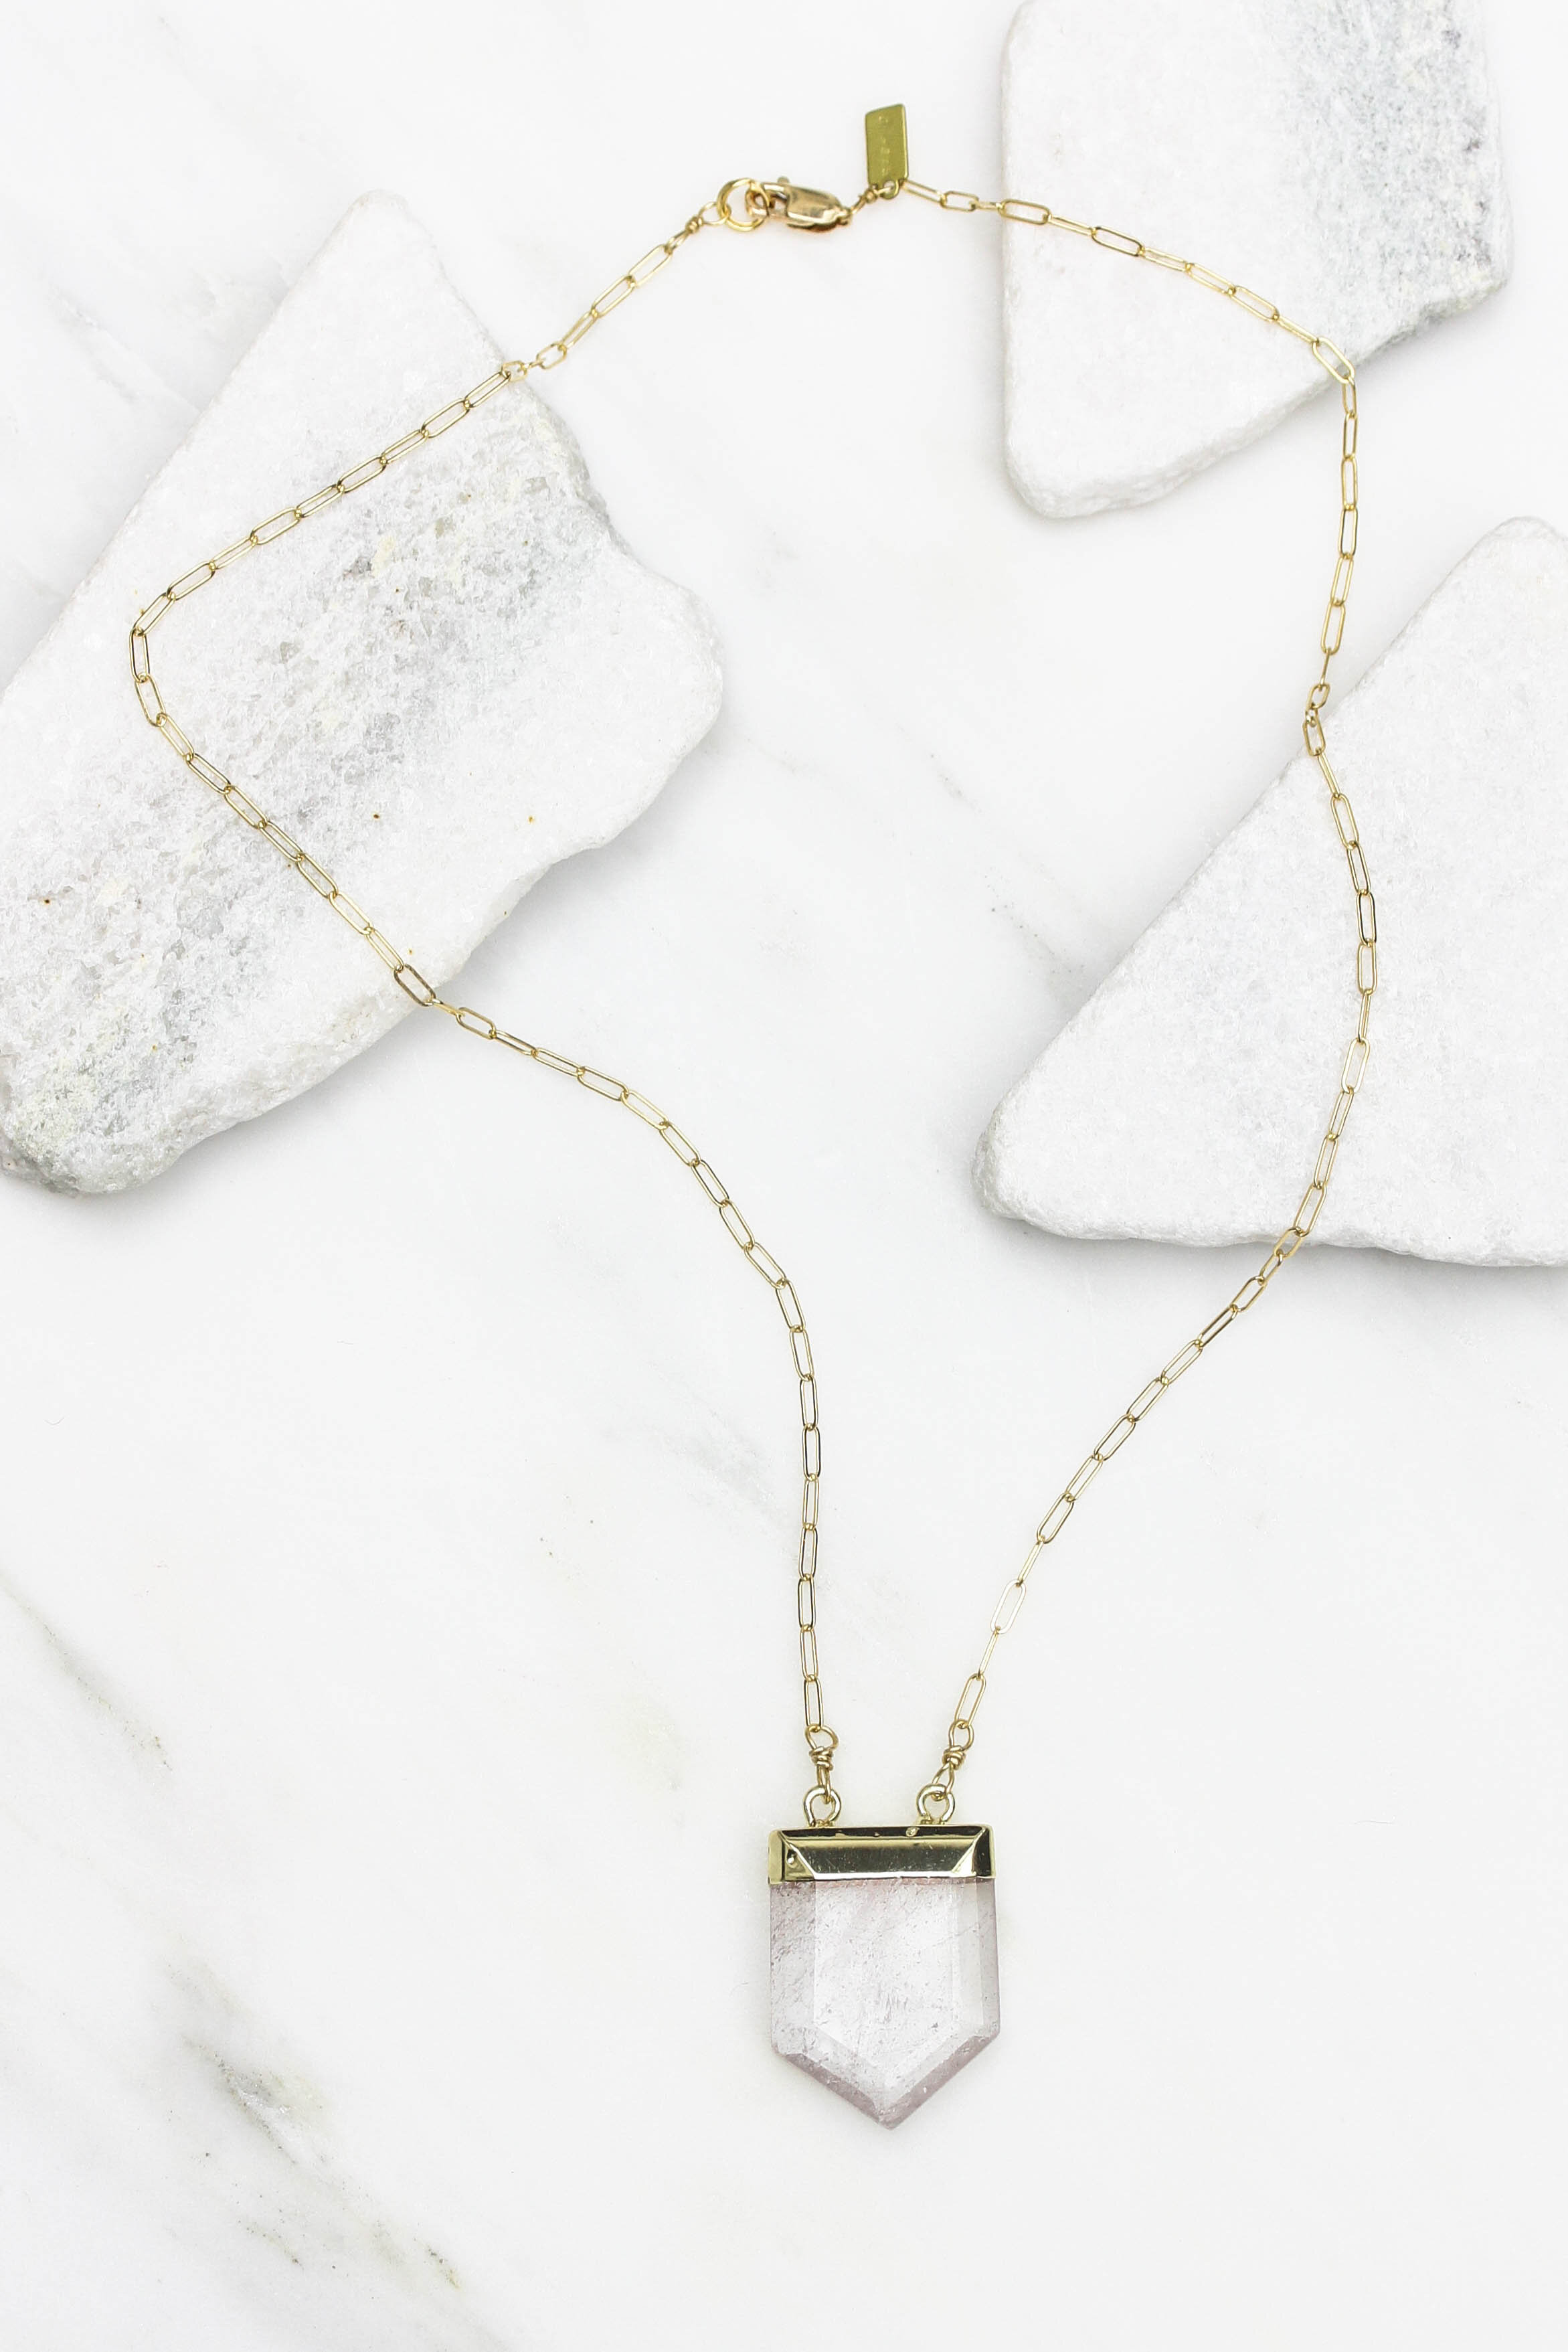 Rock crystal quartz pentagon prism short necklace — Rach B Jewelry